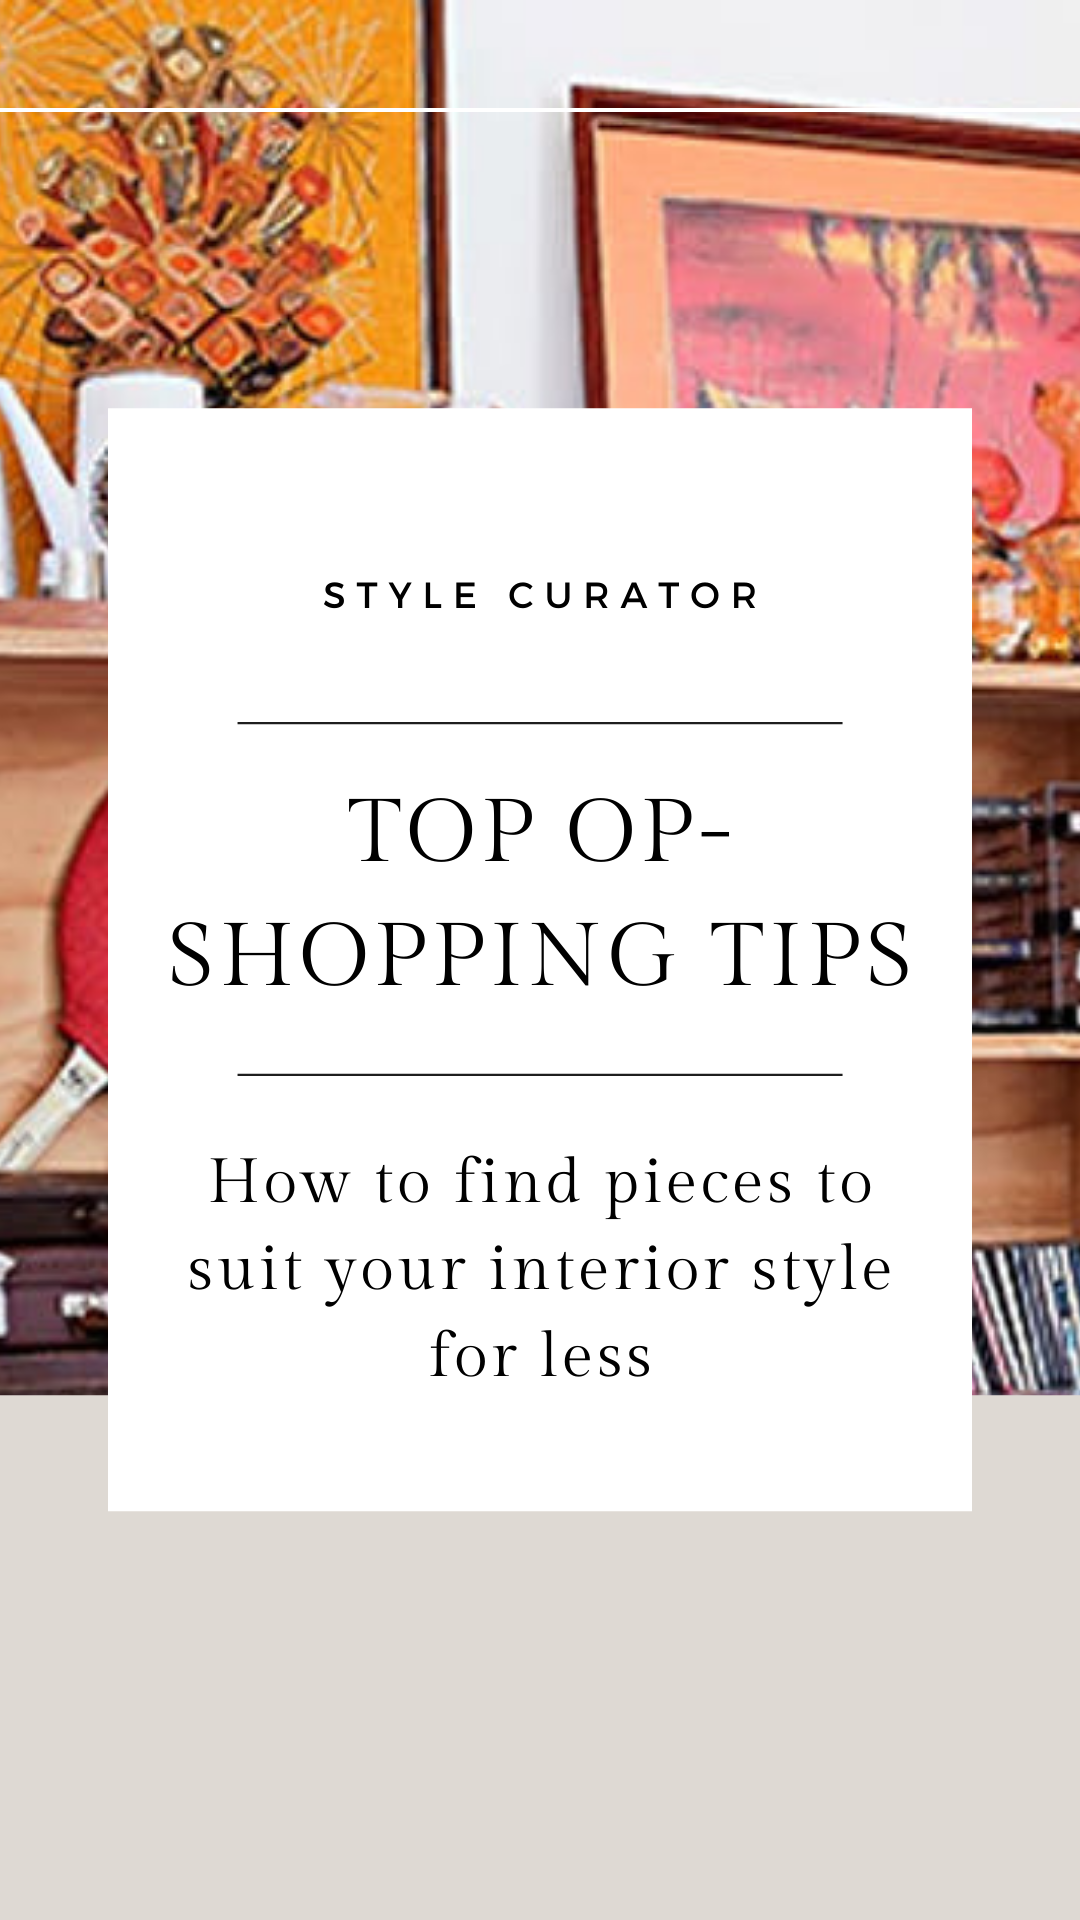 Top op shopping tips